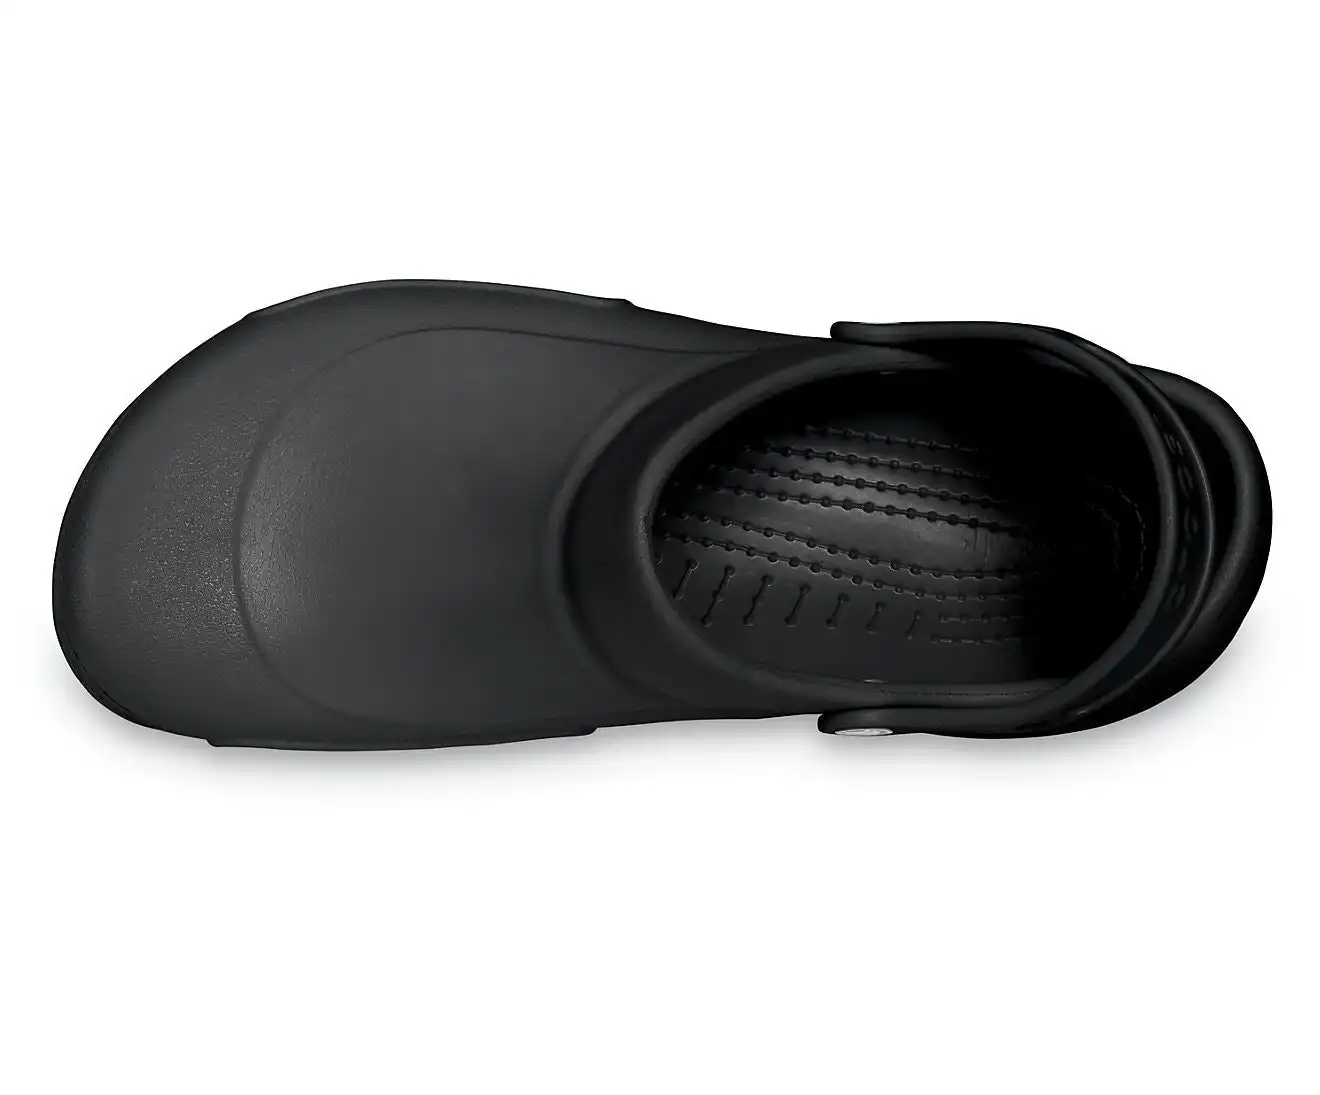 Crocs Bistro Slip Resistant Clogs Shoes Sandals Work Occupational - Black